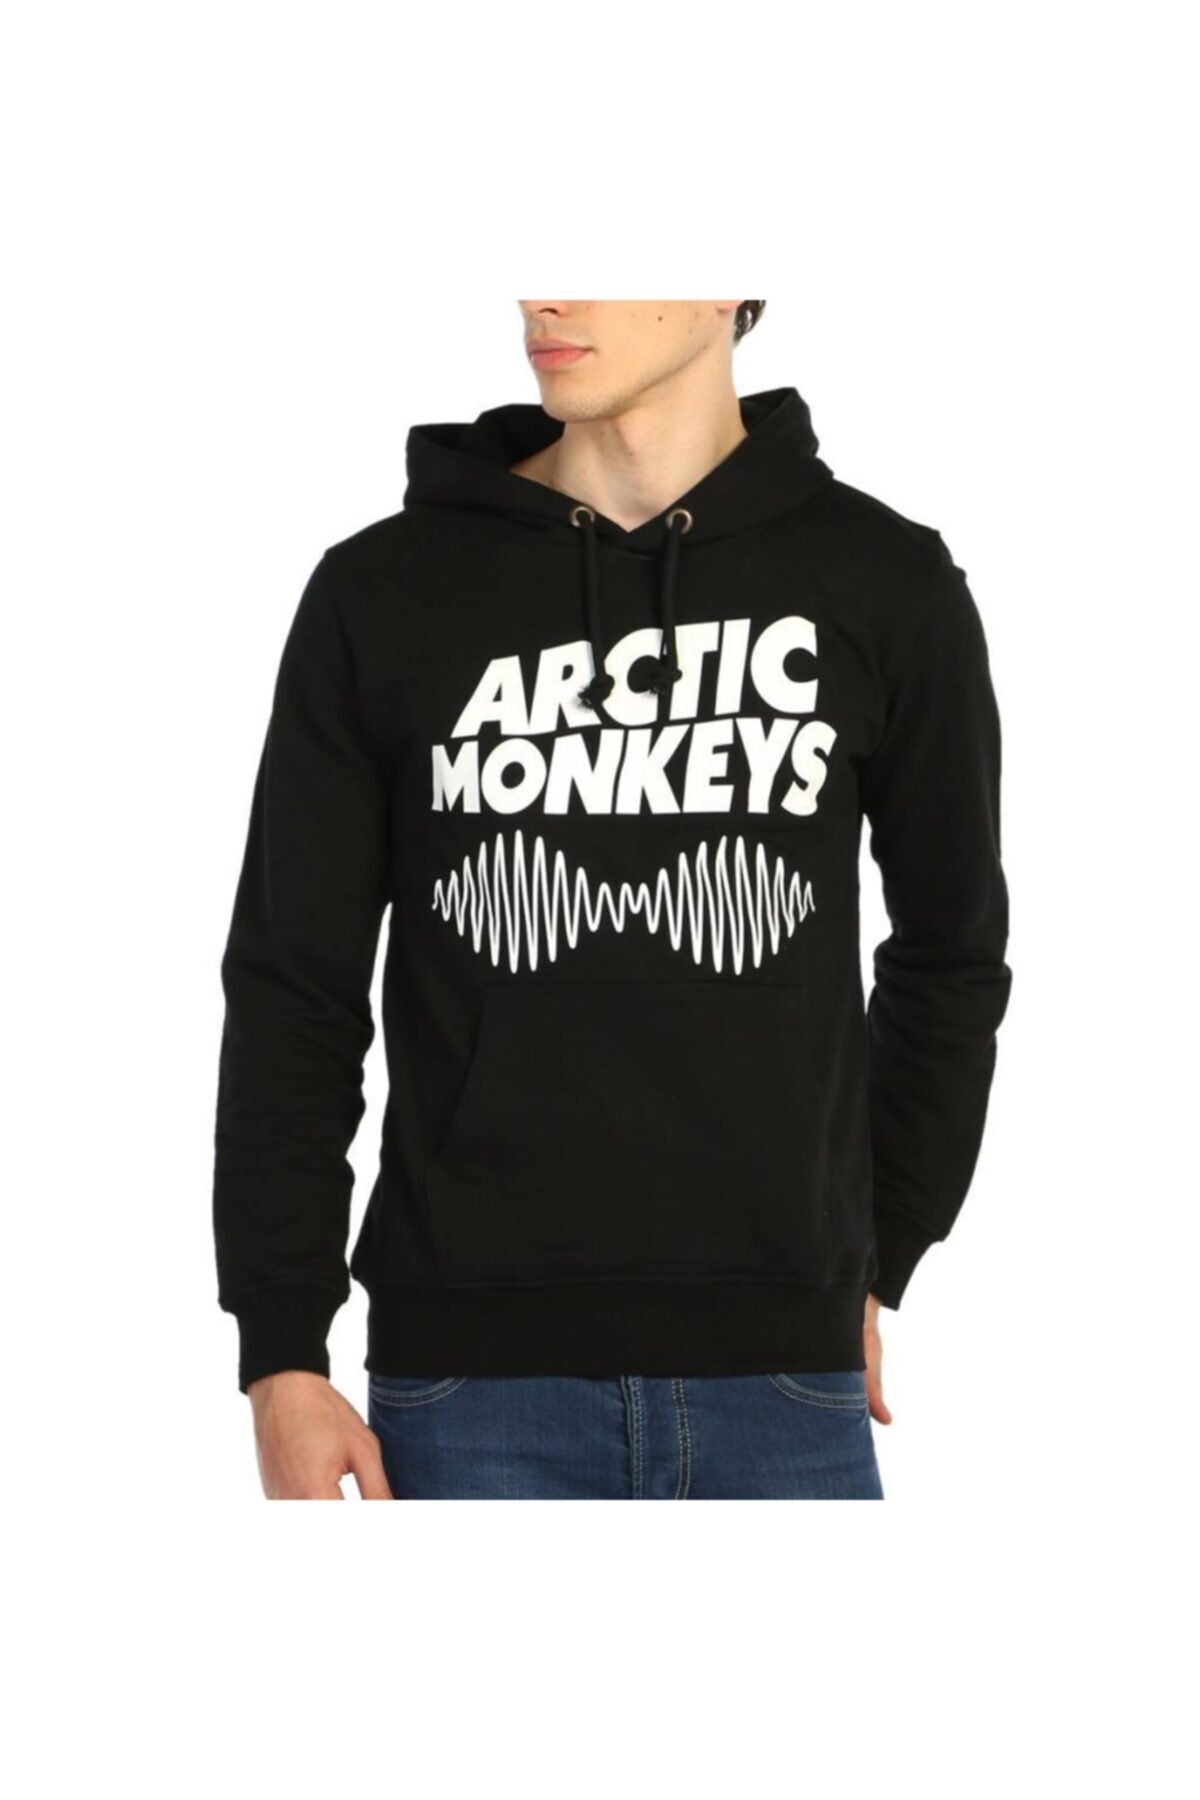 Bant Giyim - Arctic Monkeys Siyah Kapşonlu Erkek Sweatshirt